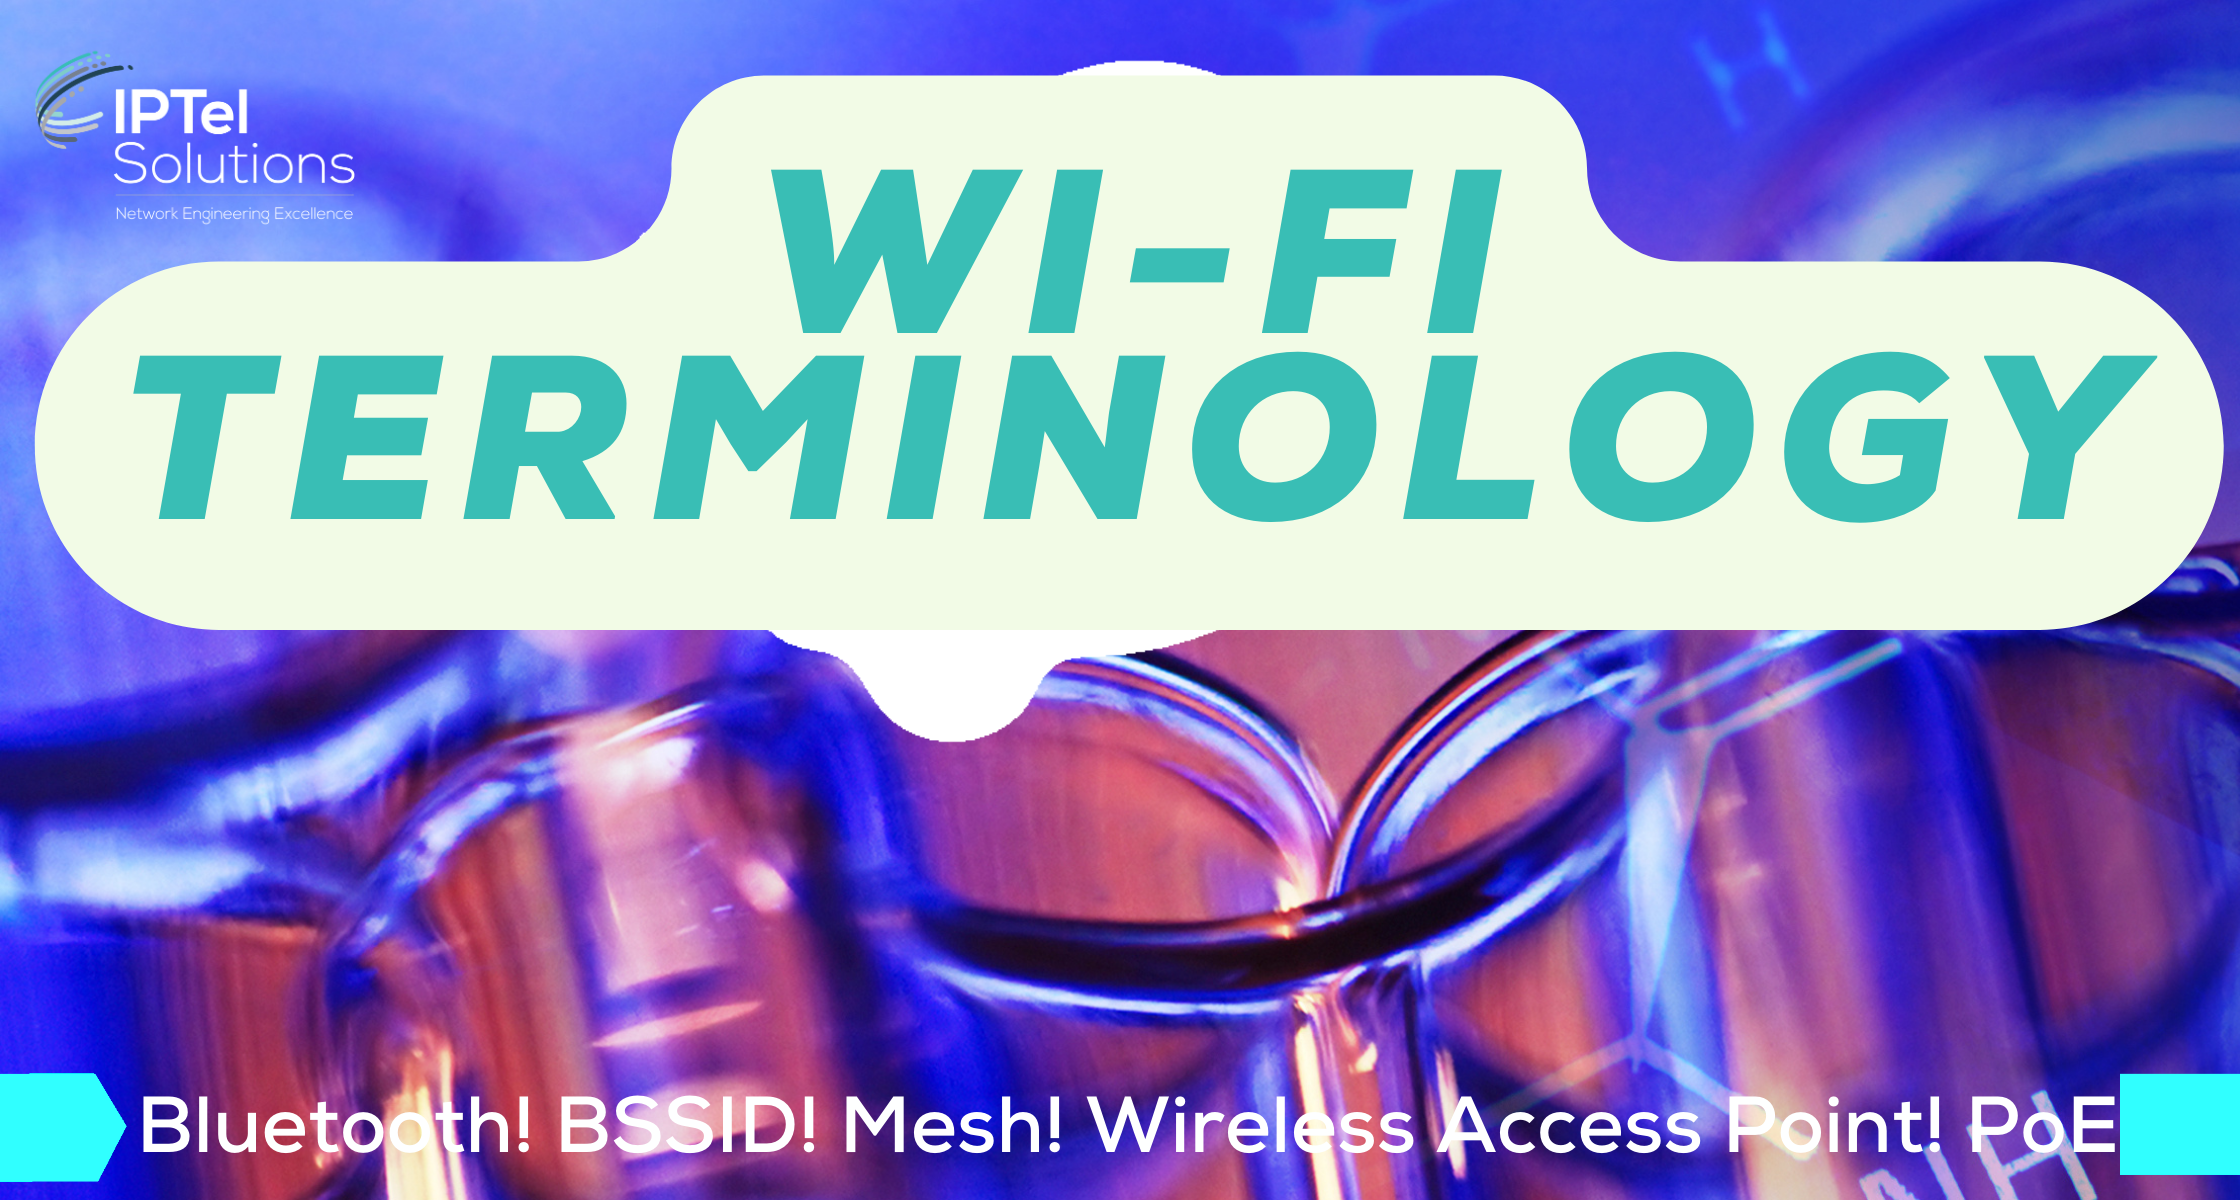 Wi-Fi Terminology